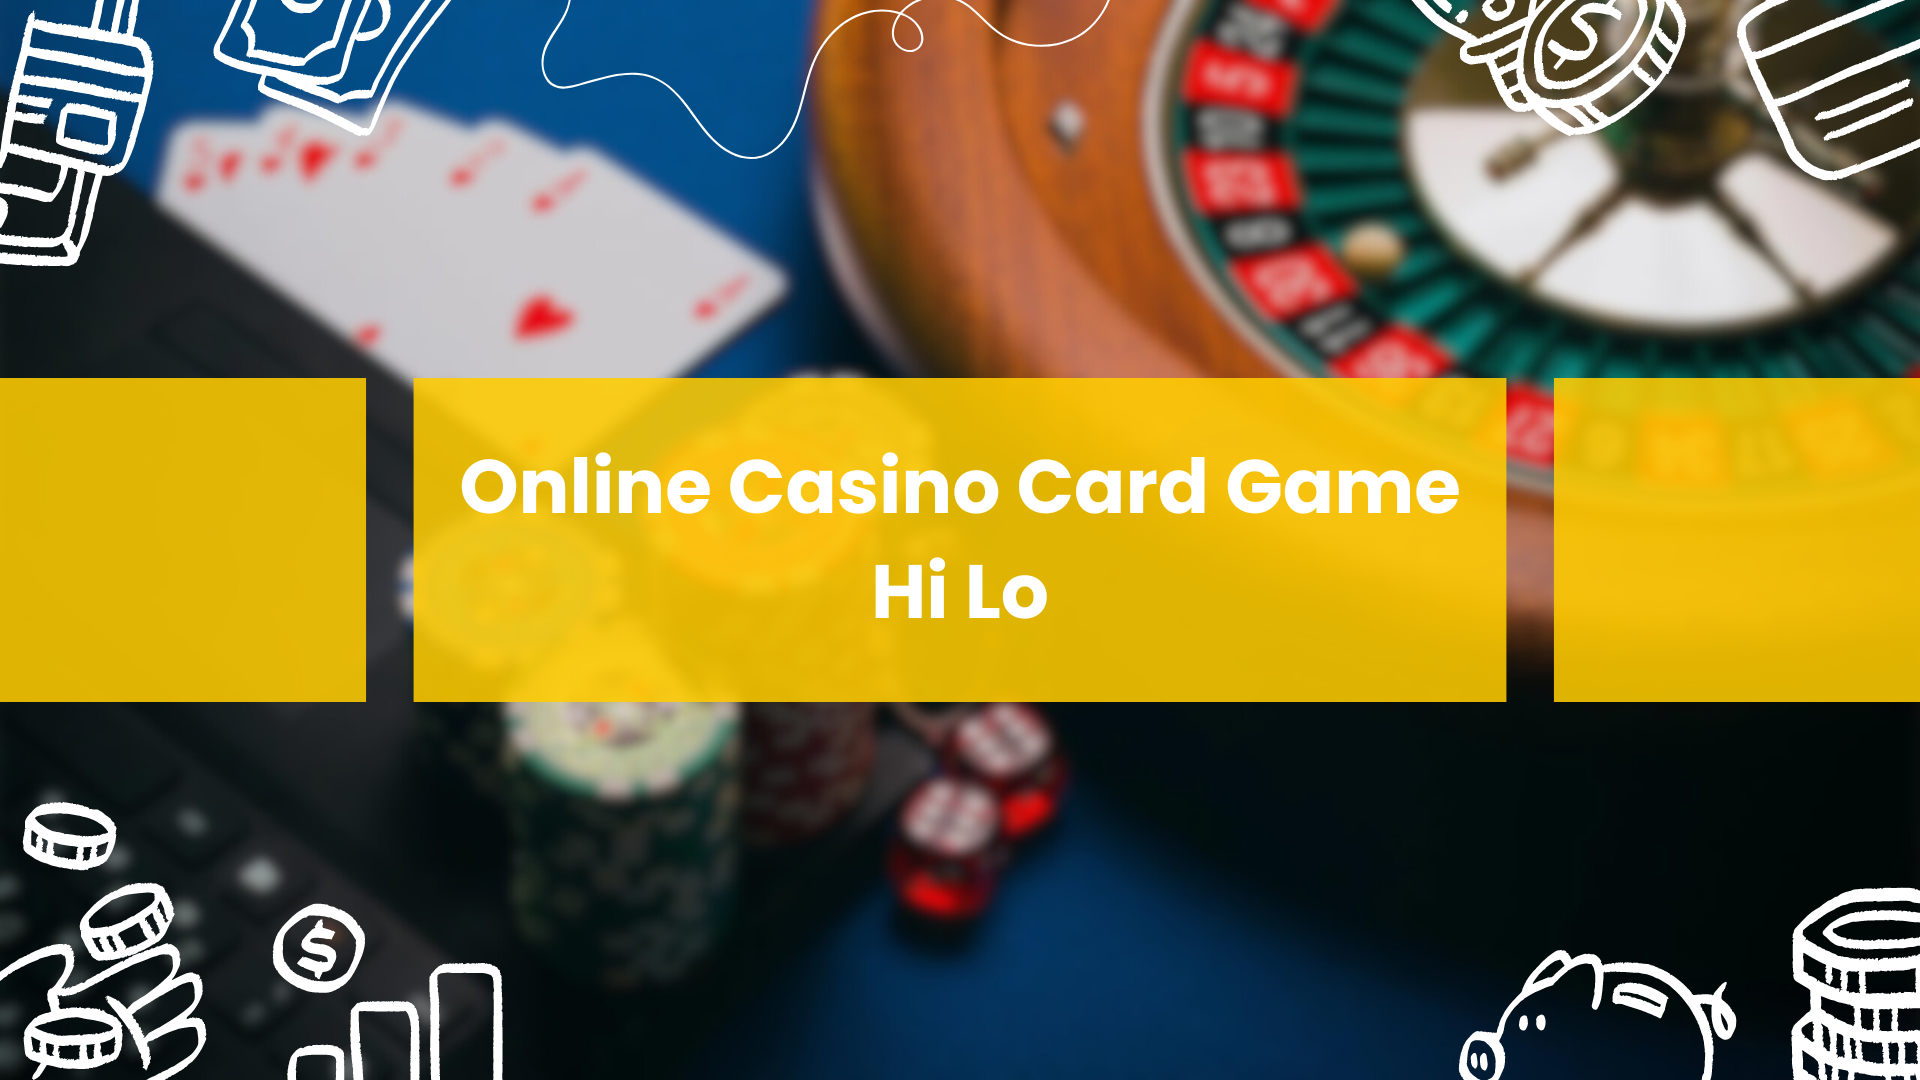 Online Casino Card Game Hi Lo